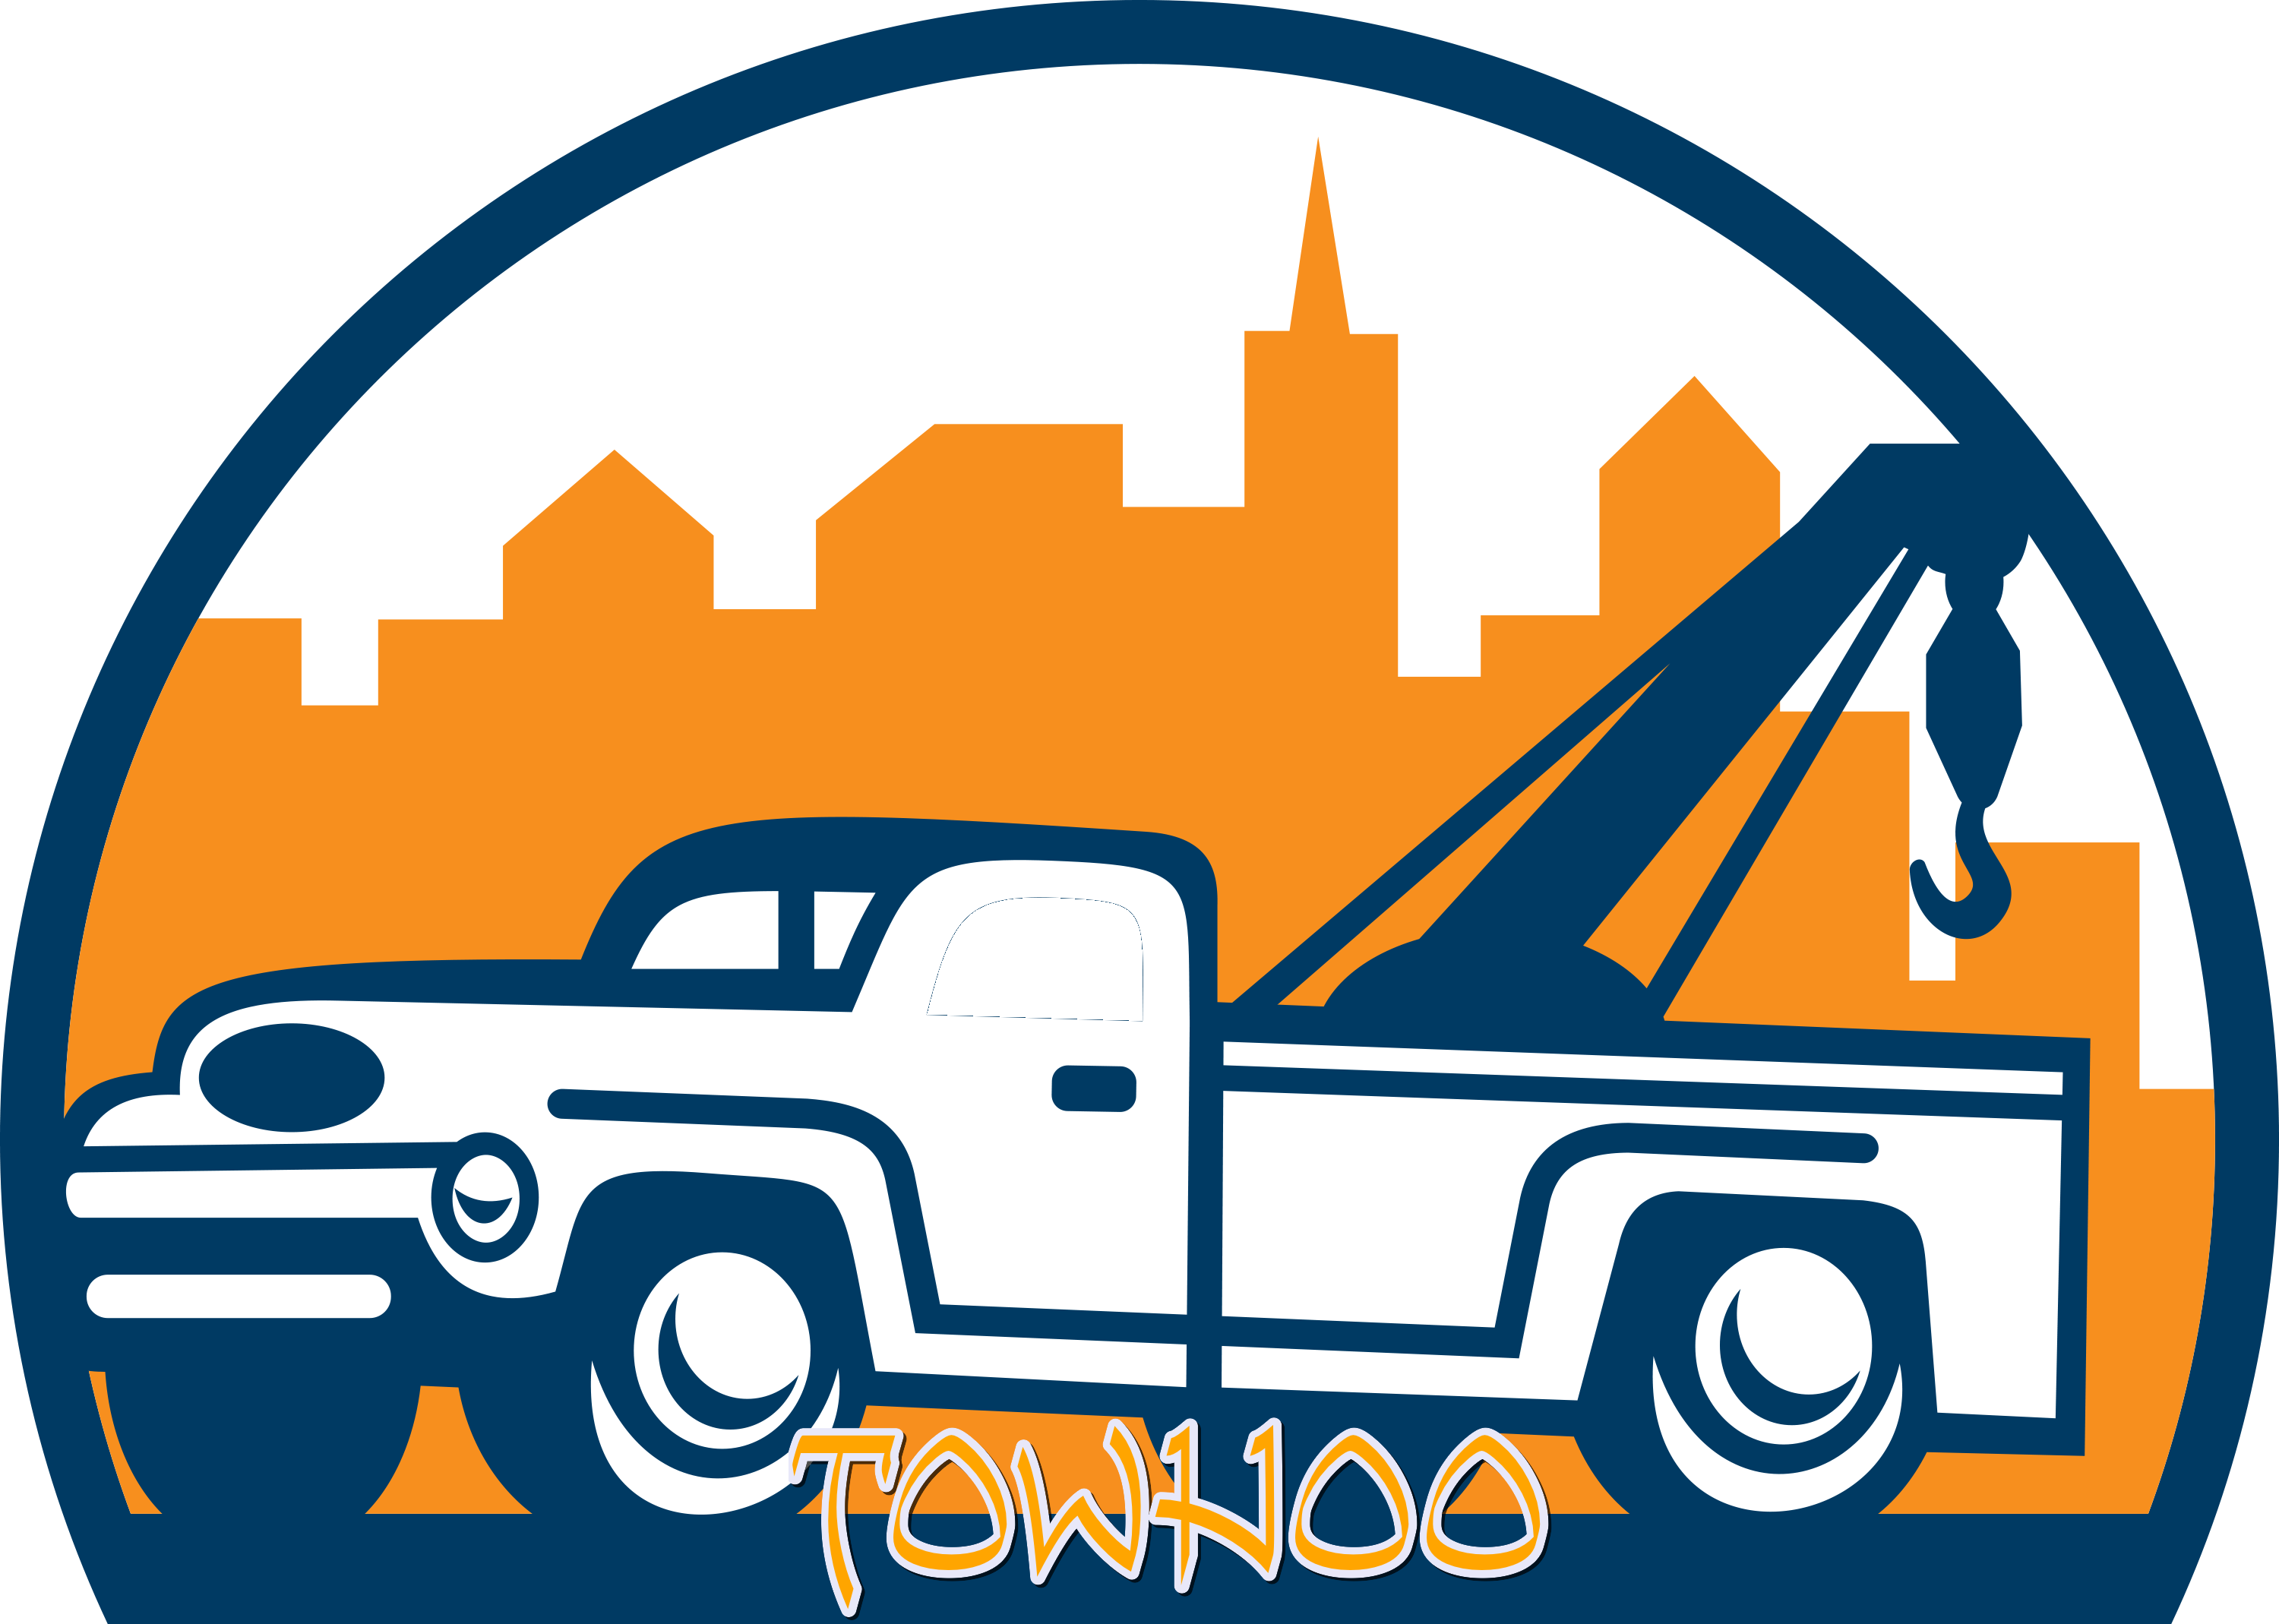 Towhoo - Tow Truck Retro (3000x2138)